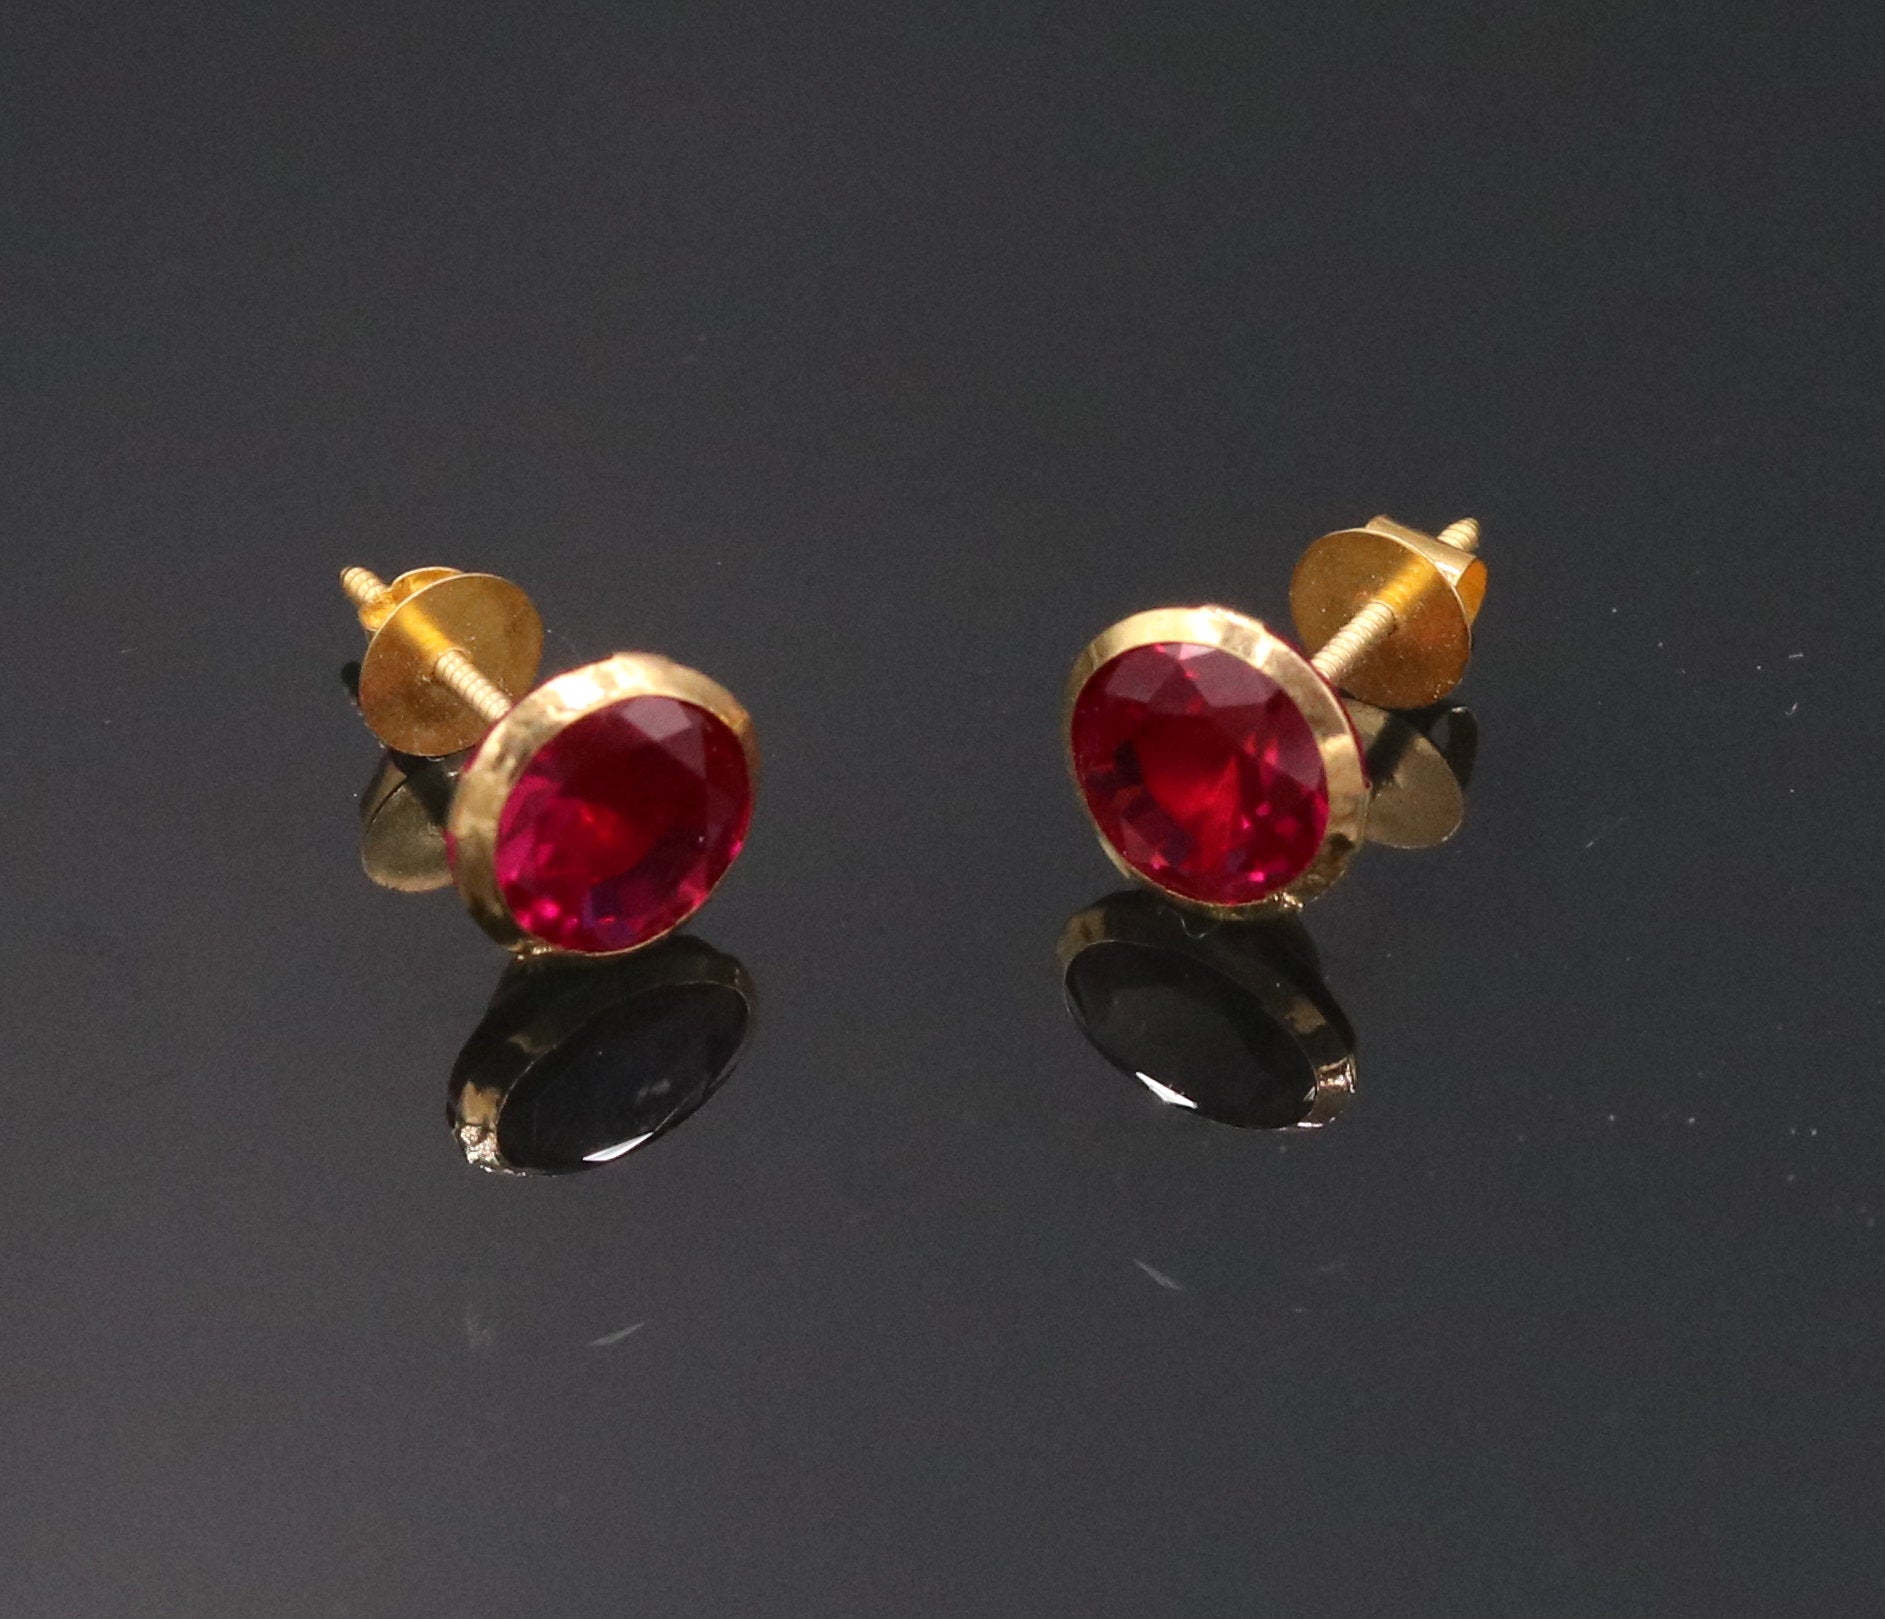 18Karat yellow gold gorgeous red cubic zircon stone amazing 6 mm stud earring excellent vintage antique design er88 - TRIBAL ORNAMENTS